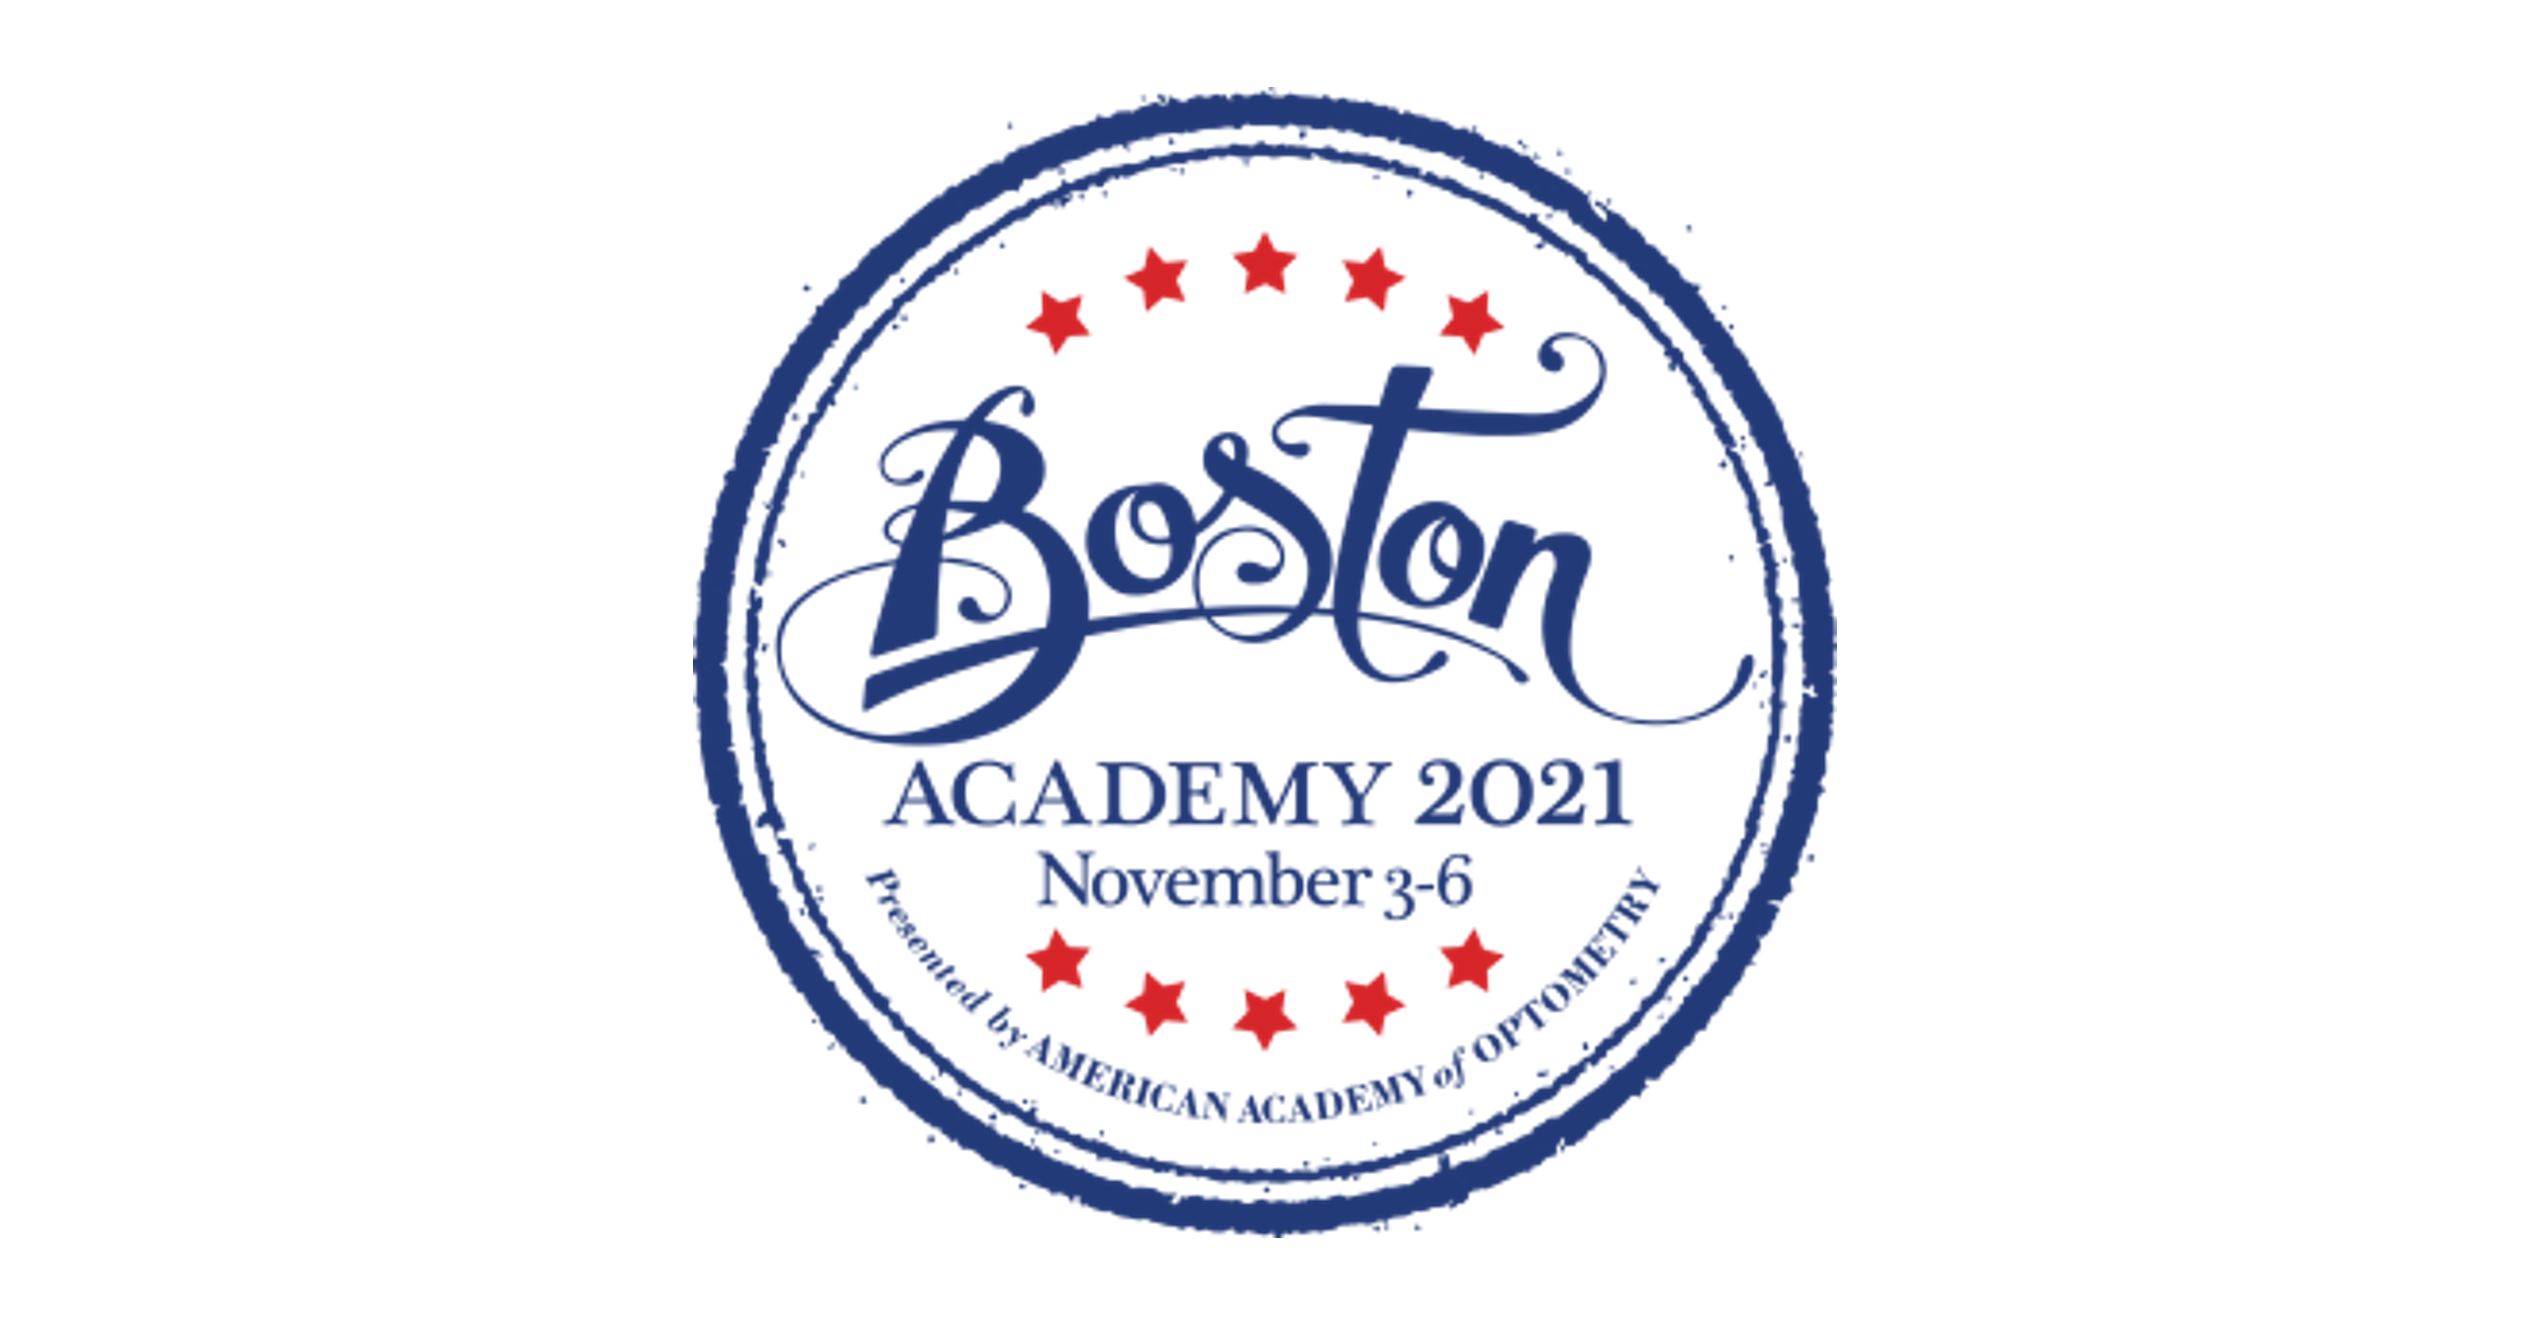 Boston Academy 2021 Logo